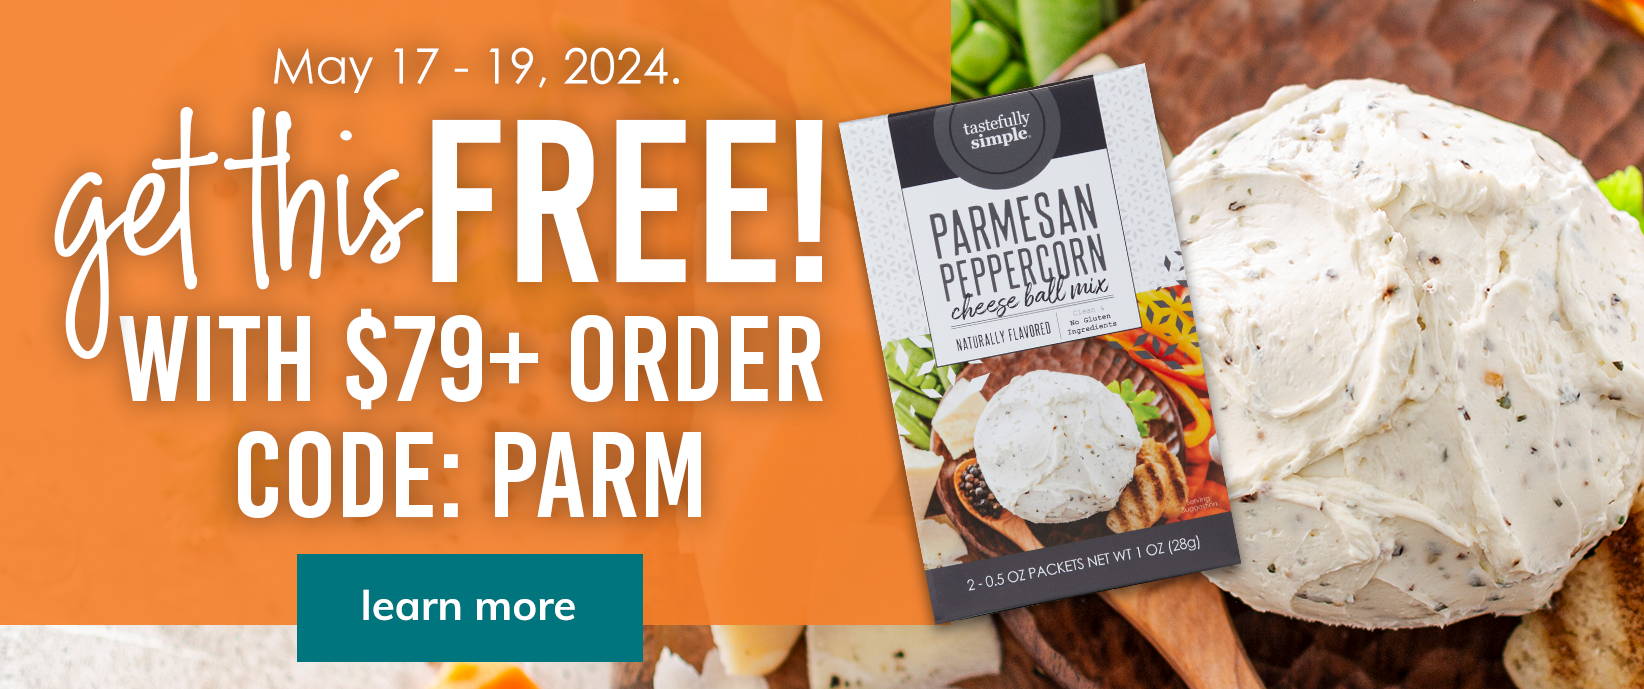 get parmesan peppercorn cheese ball mix free! 